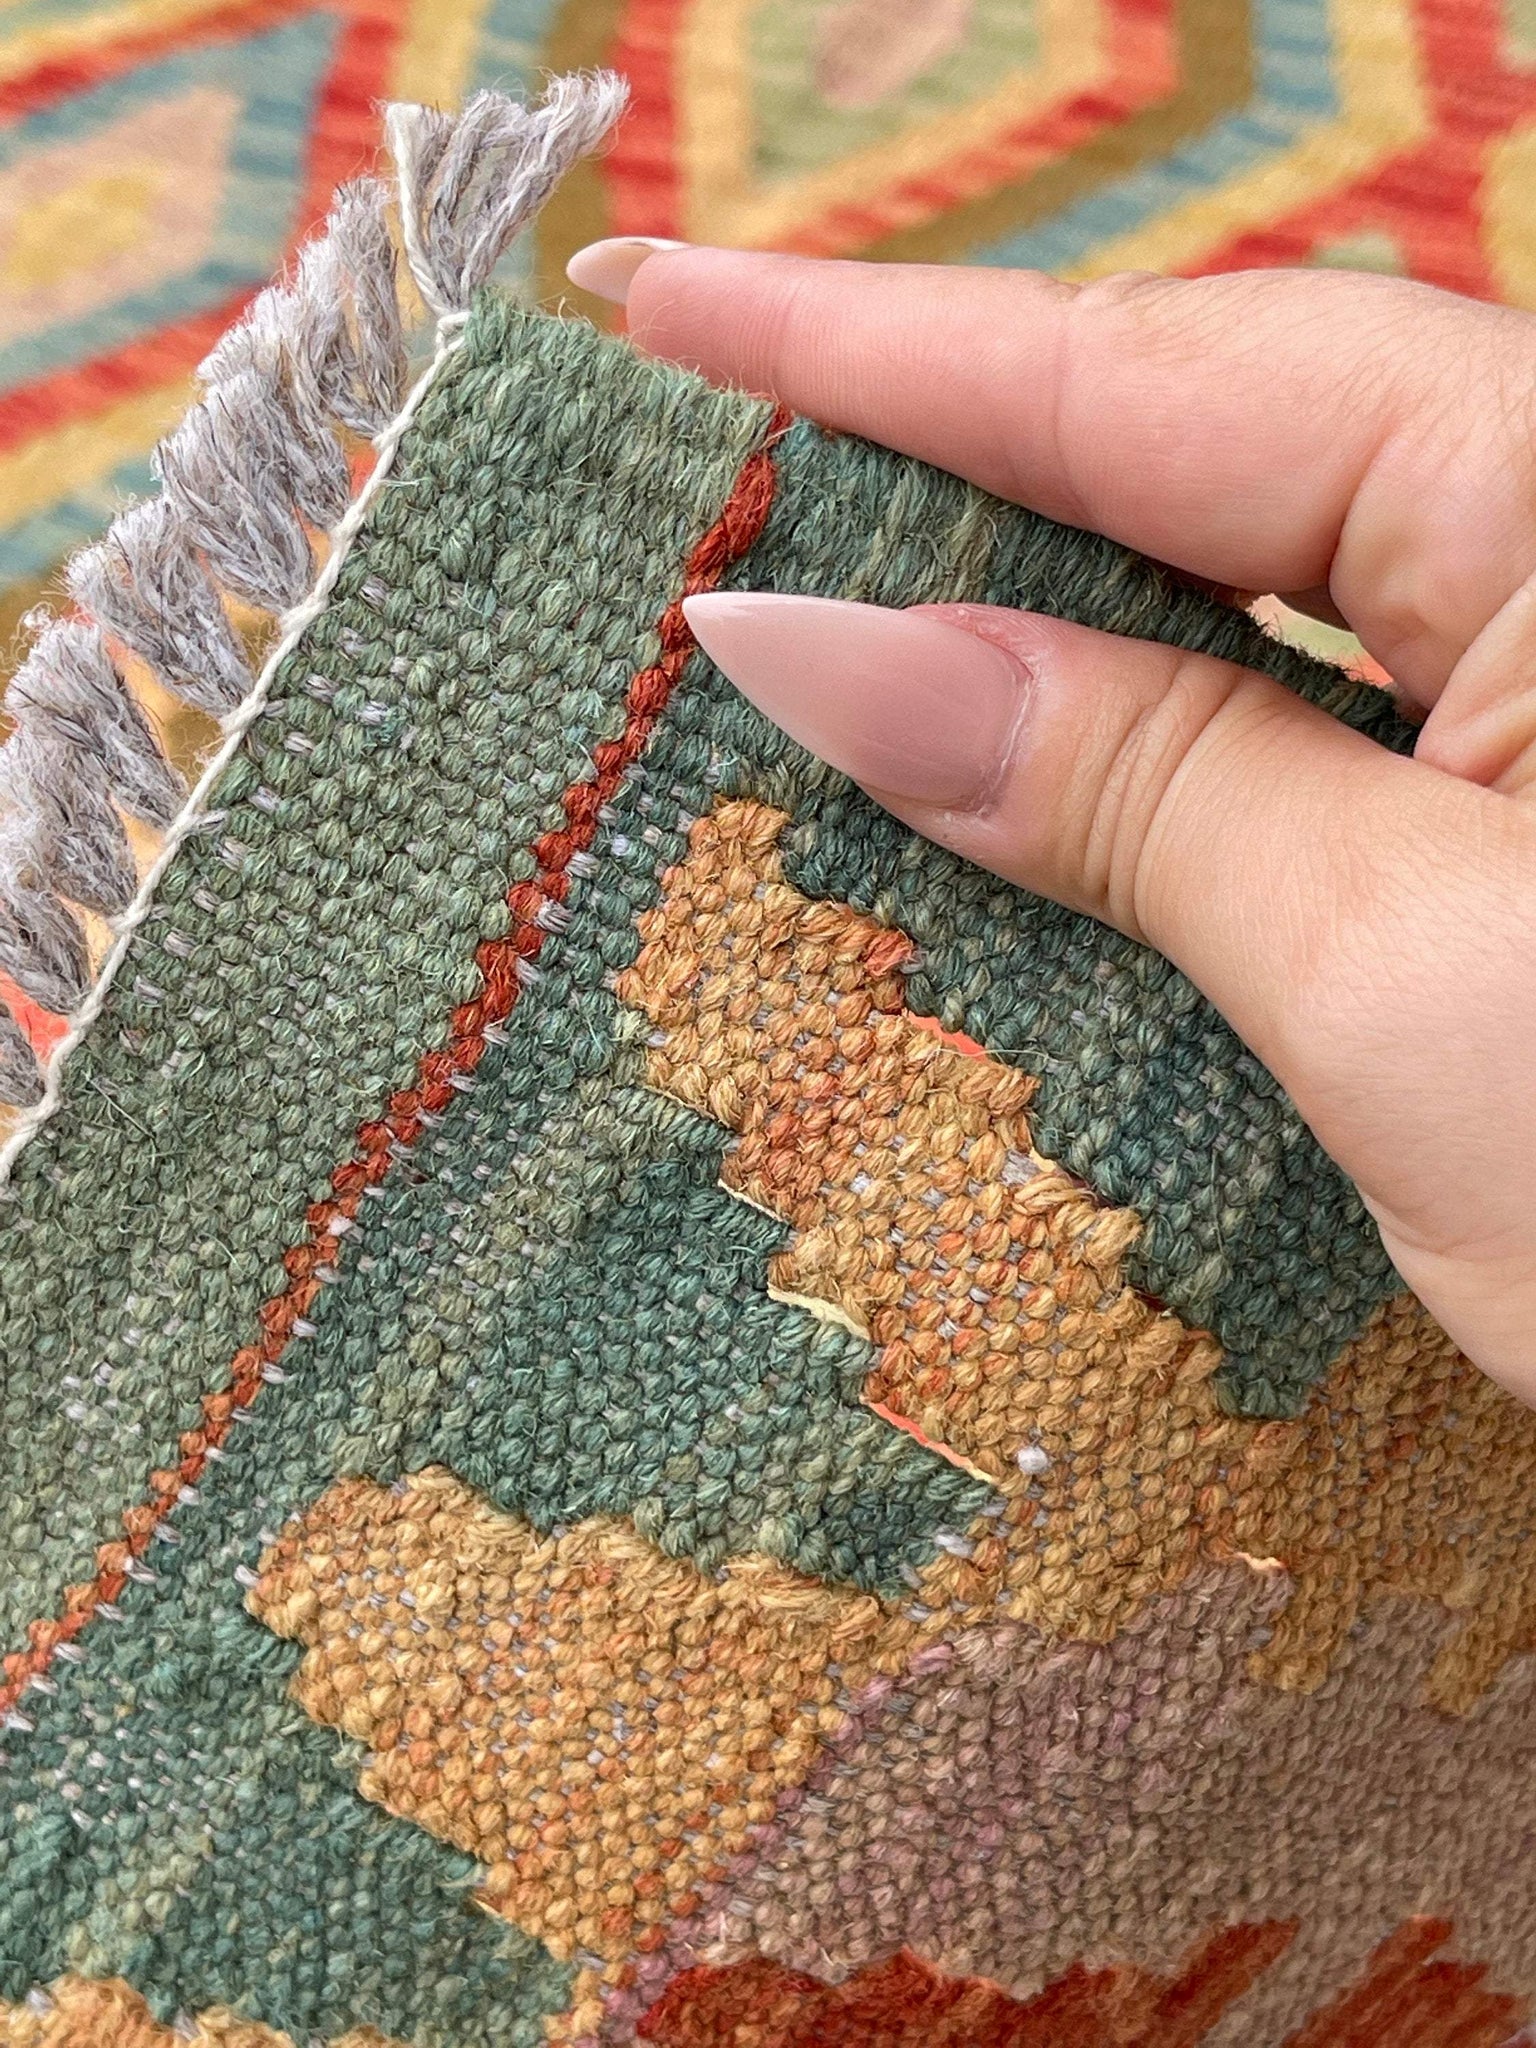 5x7 (150x215) Handmade Afghan Kilim Rug |Burnt Orange Moss Green Turquoise Salmon Pink| Flatweave Boho Tribal Turkish Moroccan Oriental Wool